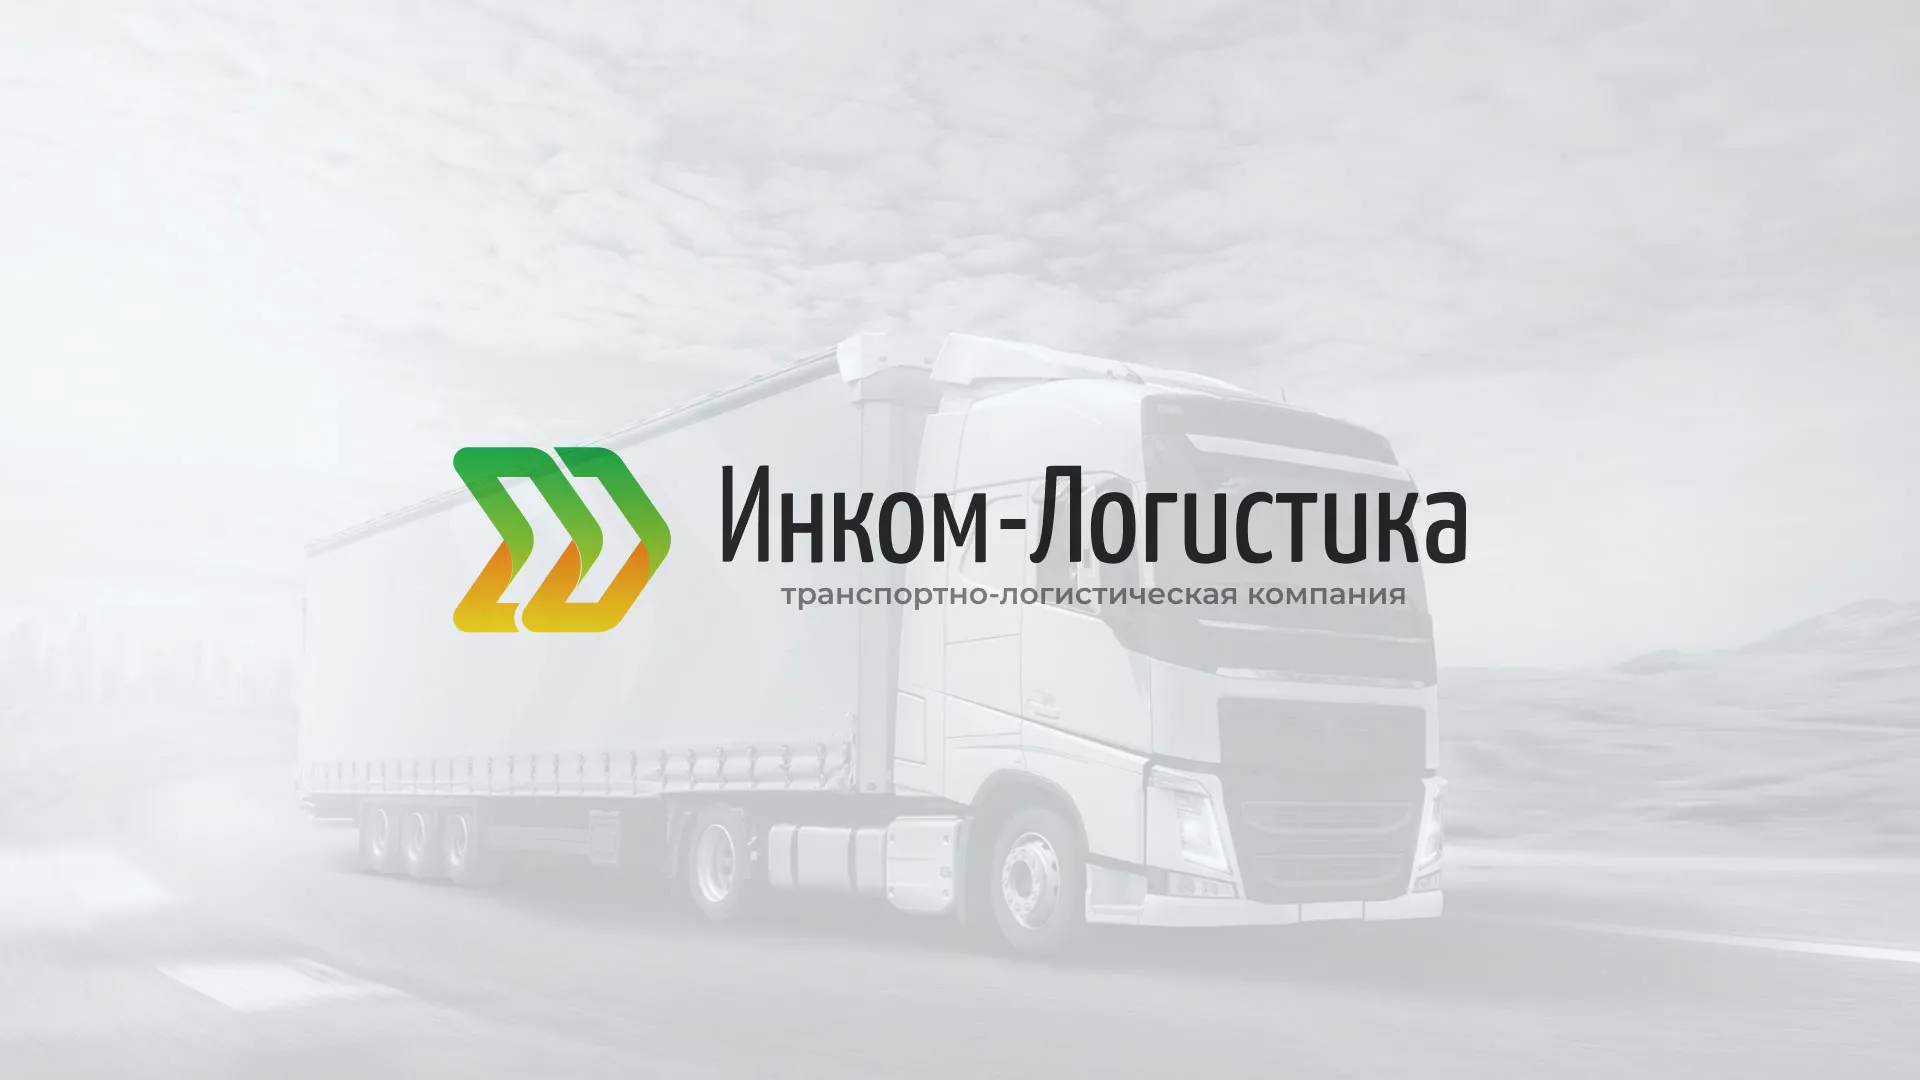 Разработка логотипа и сайта компании «Инком-Логистика» в Кстово